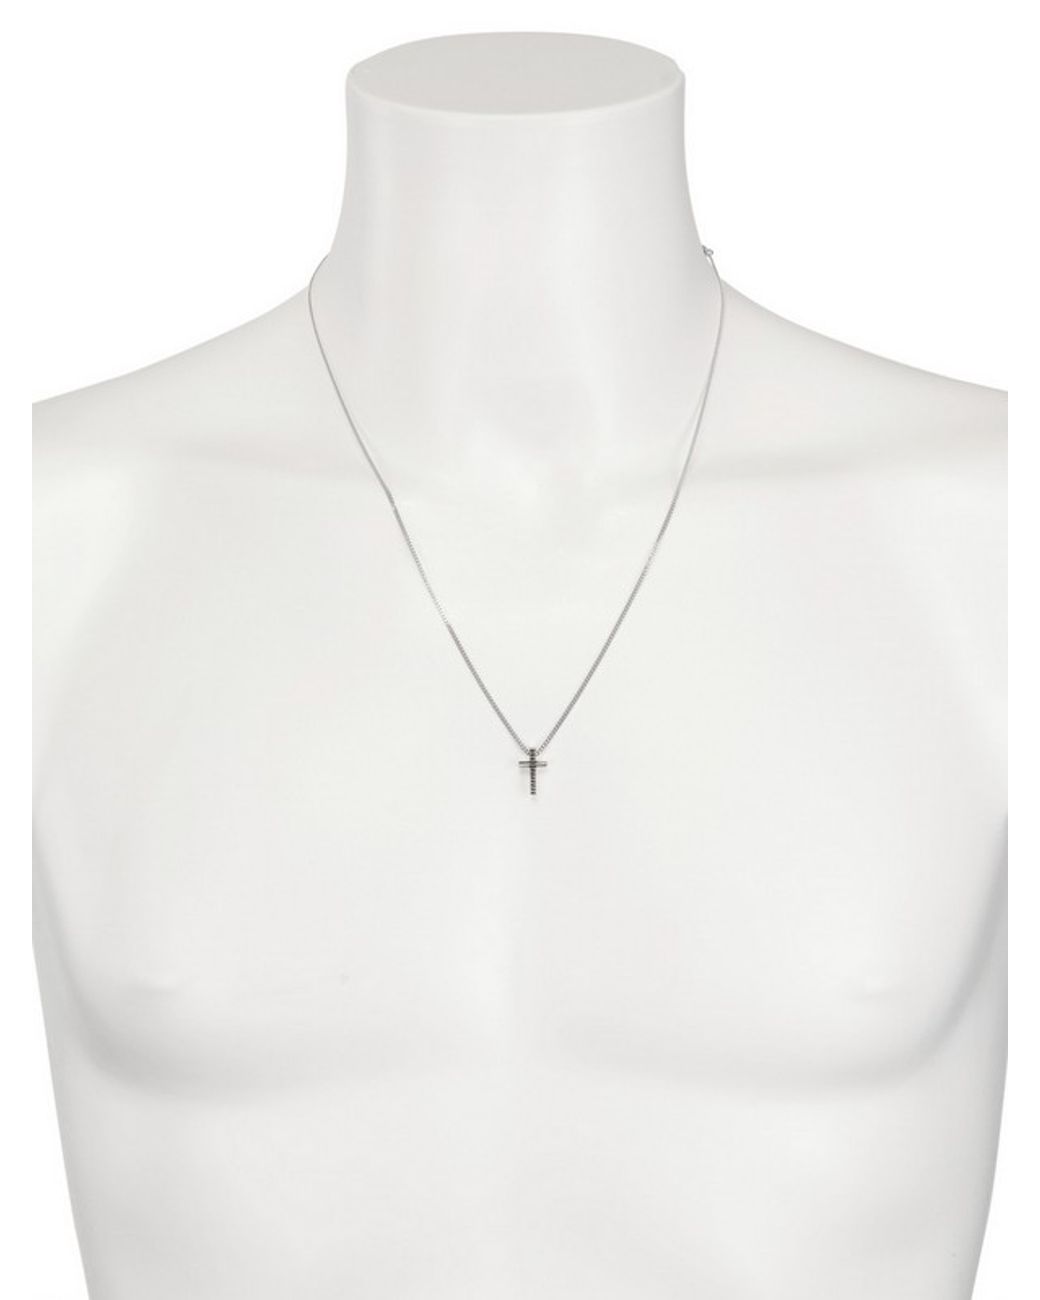 Dior Homme Cross Pendant Necklace in Metallic for Men | Lyst